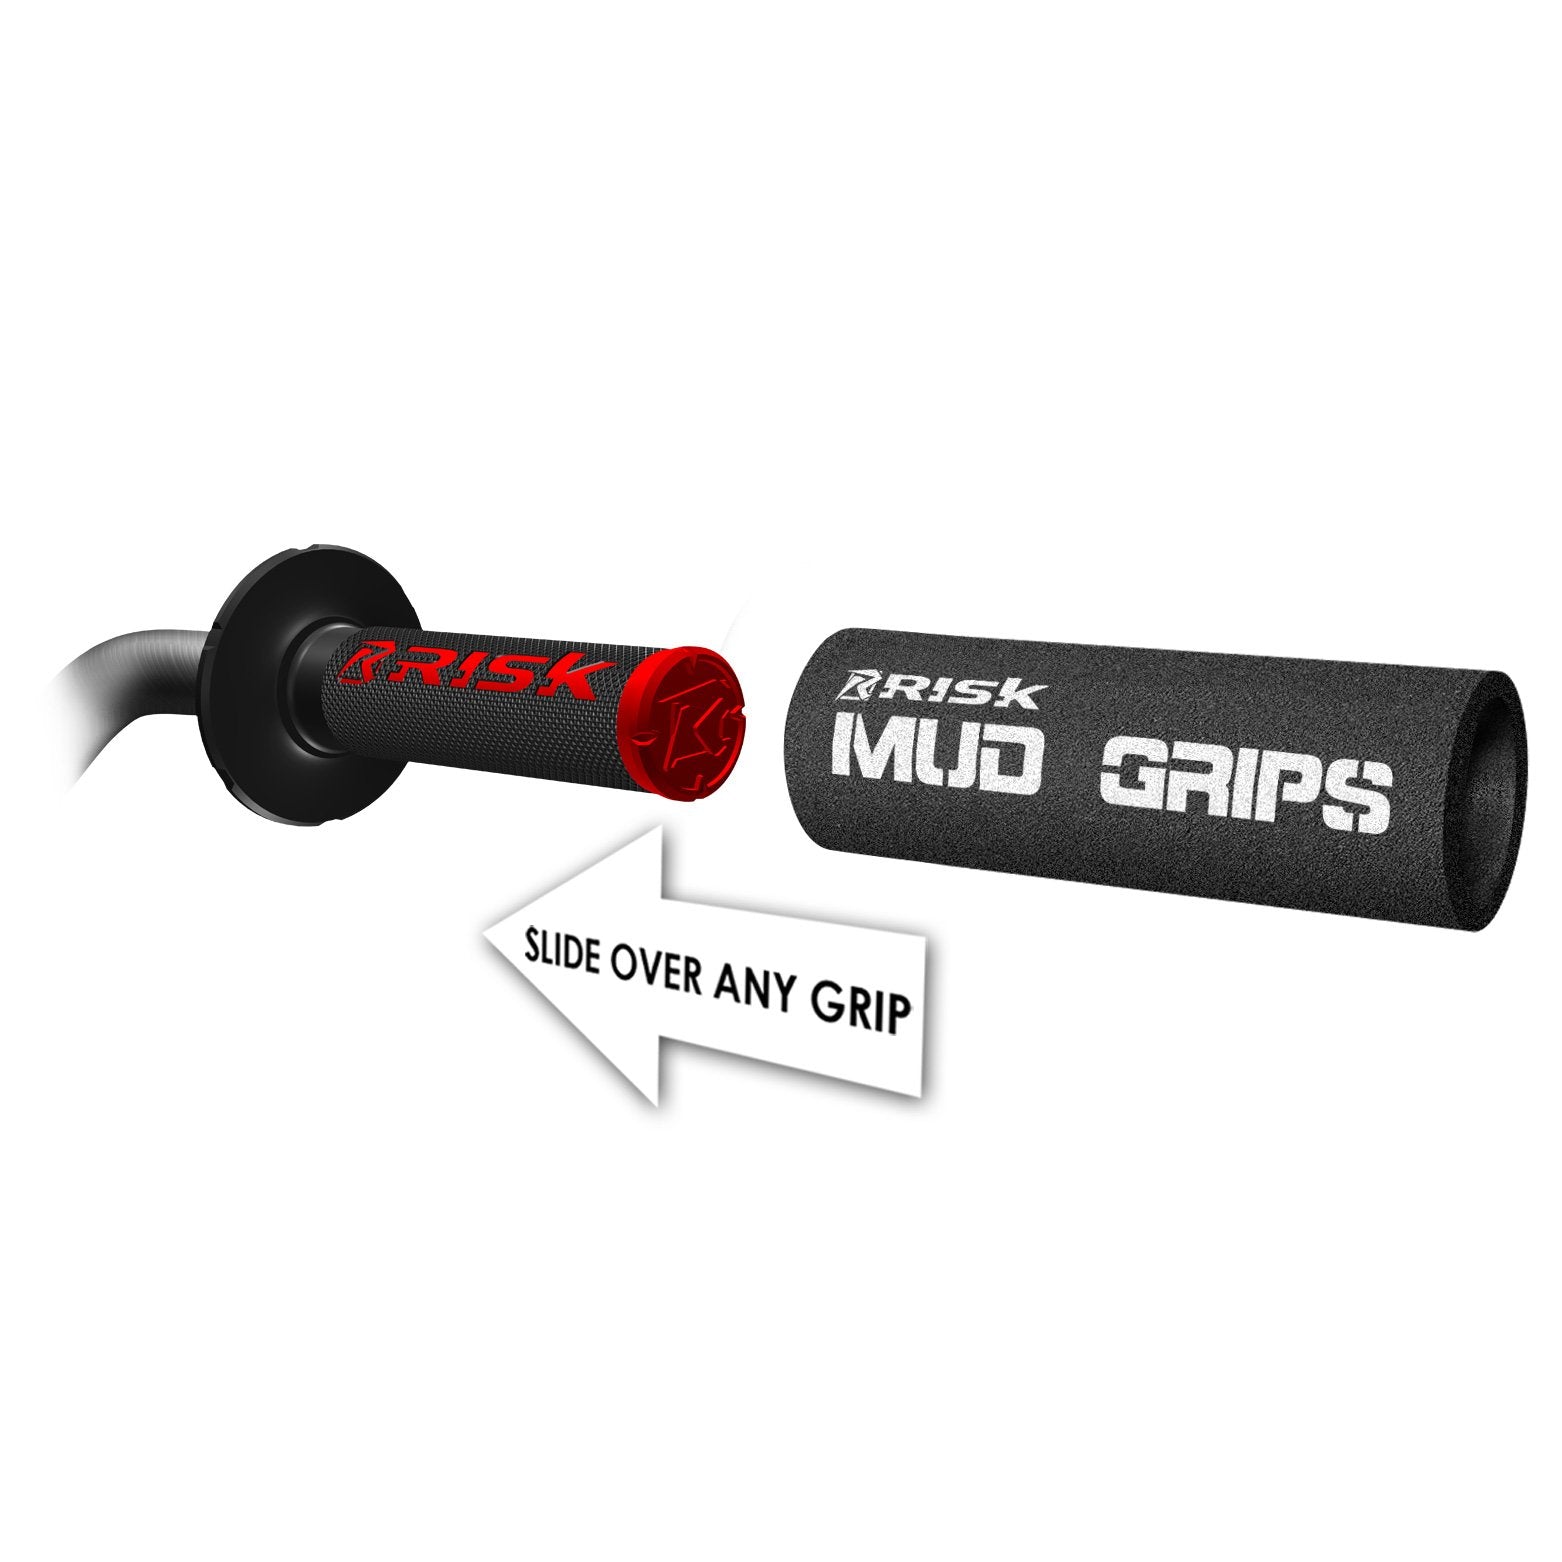 Mud Grips - Makes the muddiest, slippery grip feel dry!-Grip-Risk Racing